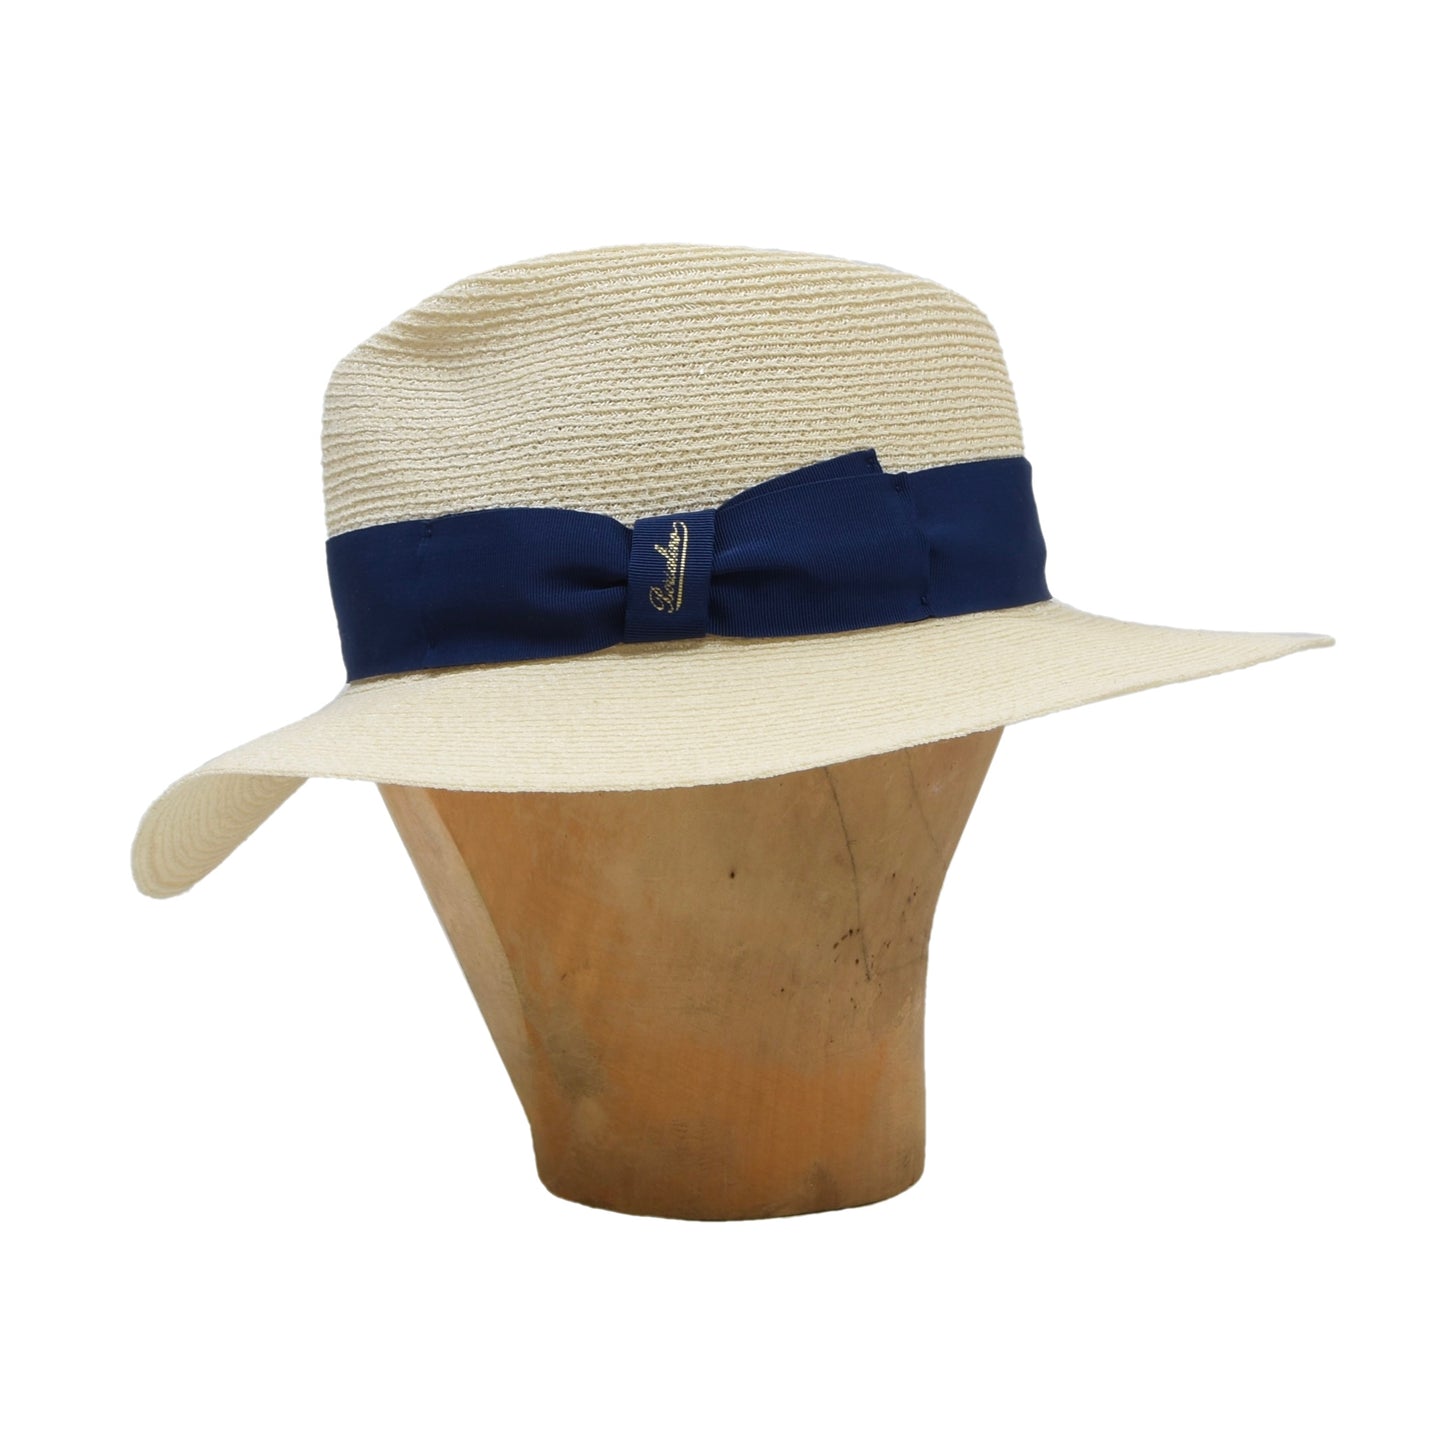 Borsalino Hemp Panama Hat Size M - Beige